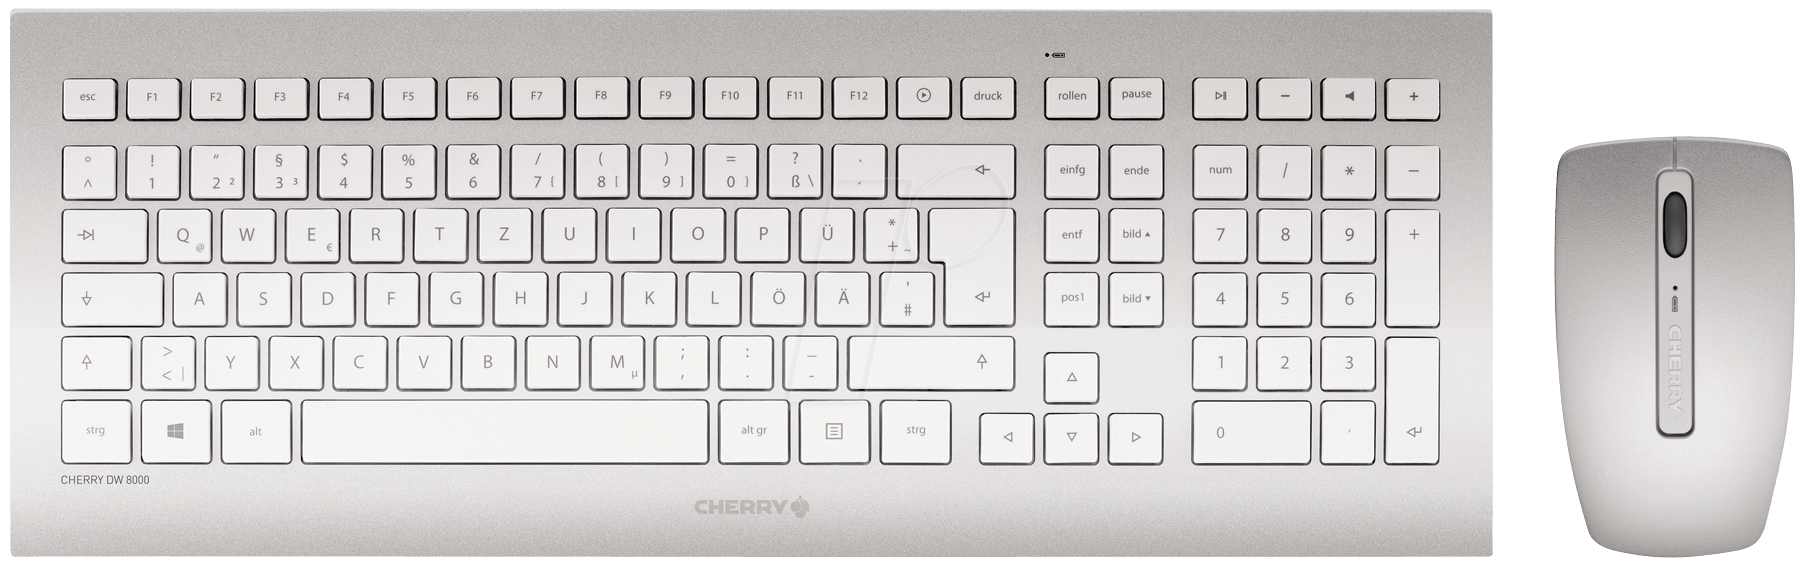 JD-0310CH - Tastatur-/Maus-Kombination, USB, mit CH-Layout